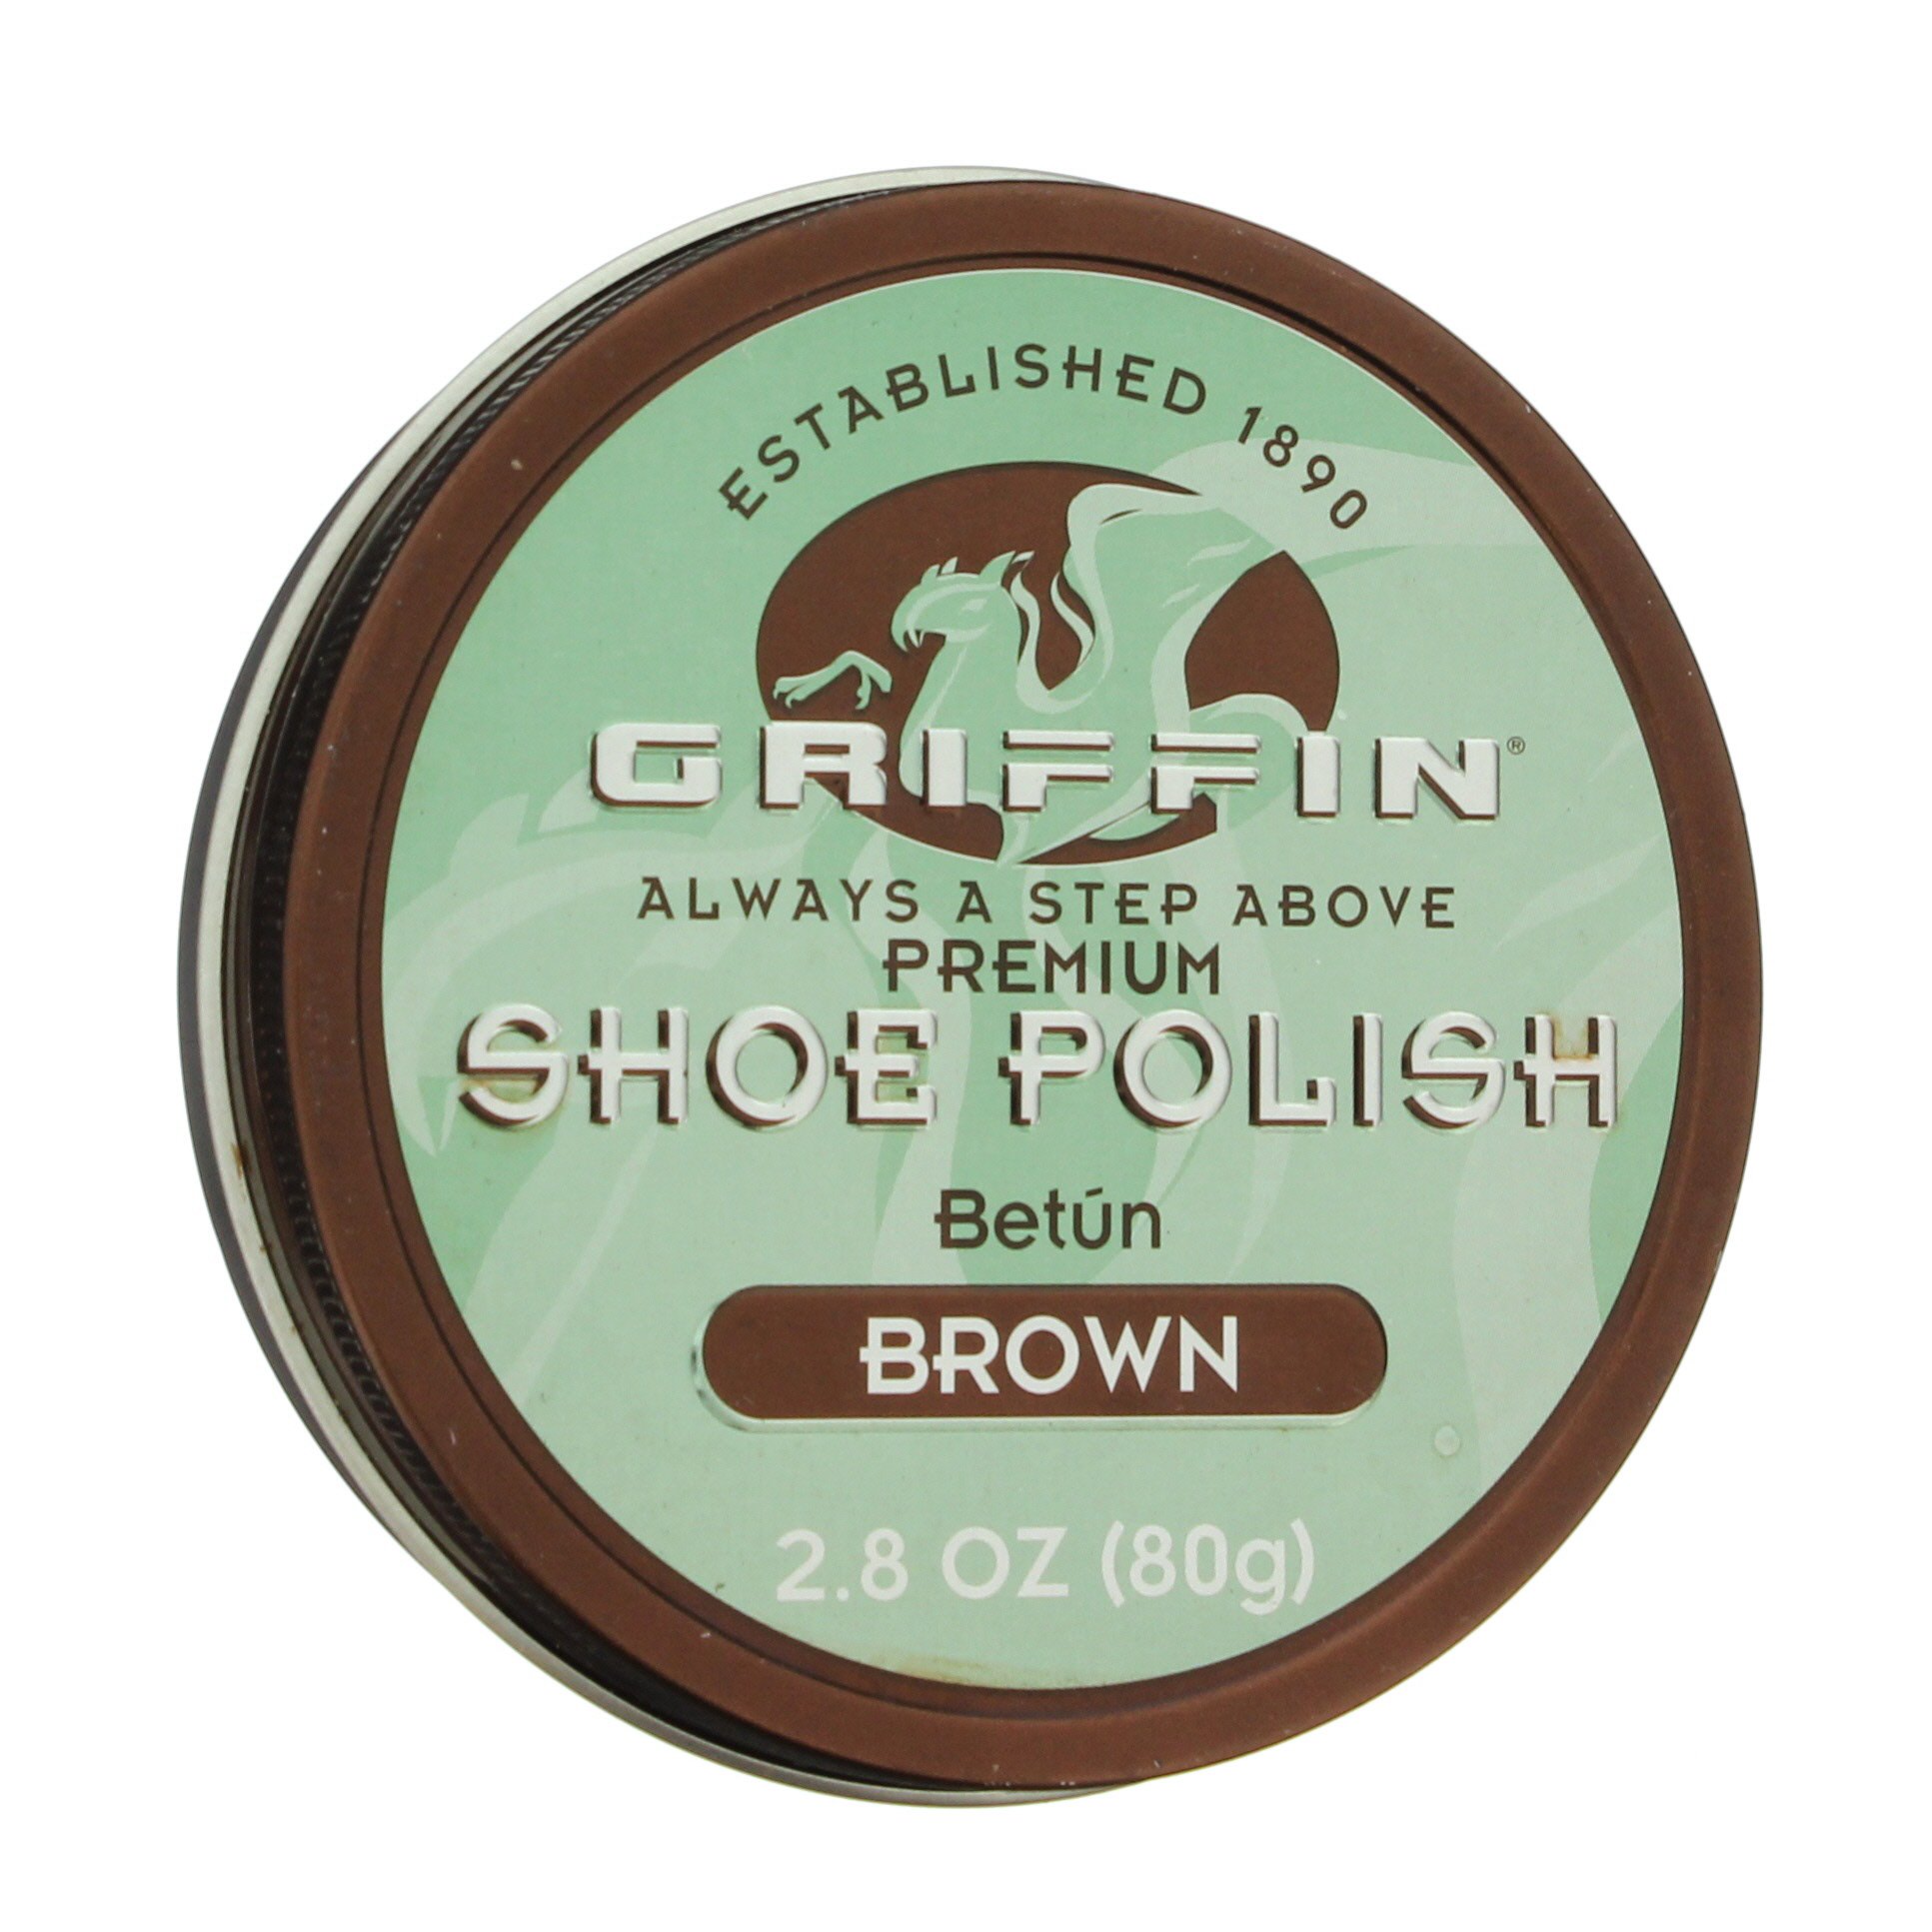 Shoe Gear Brown Paste Shoe-Polish